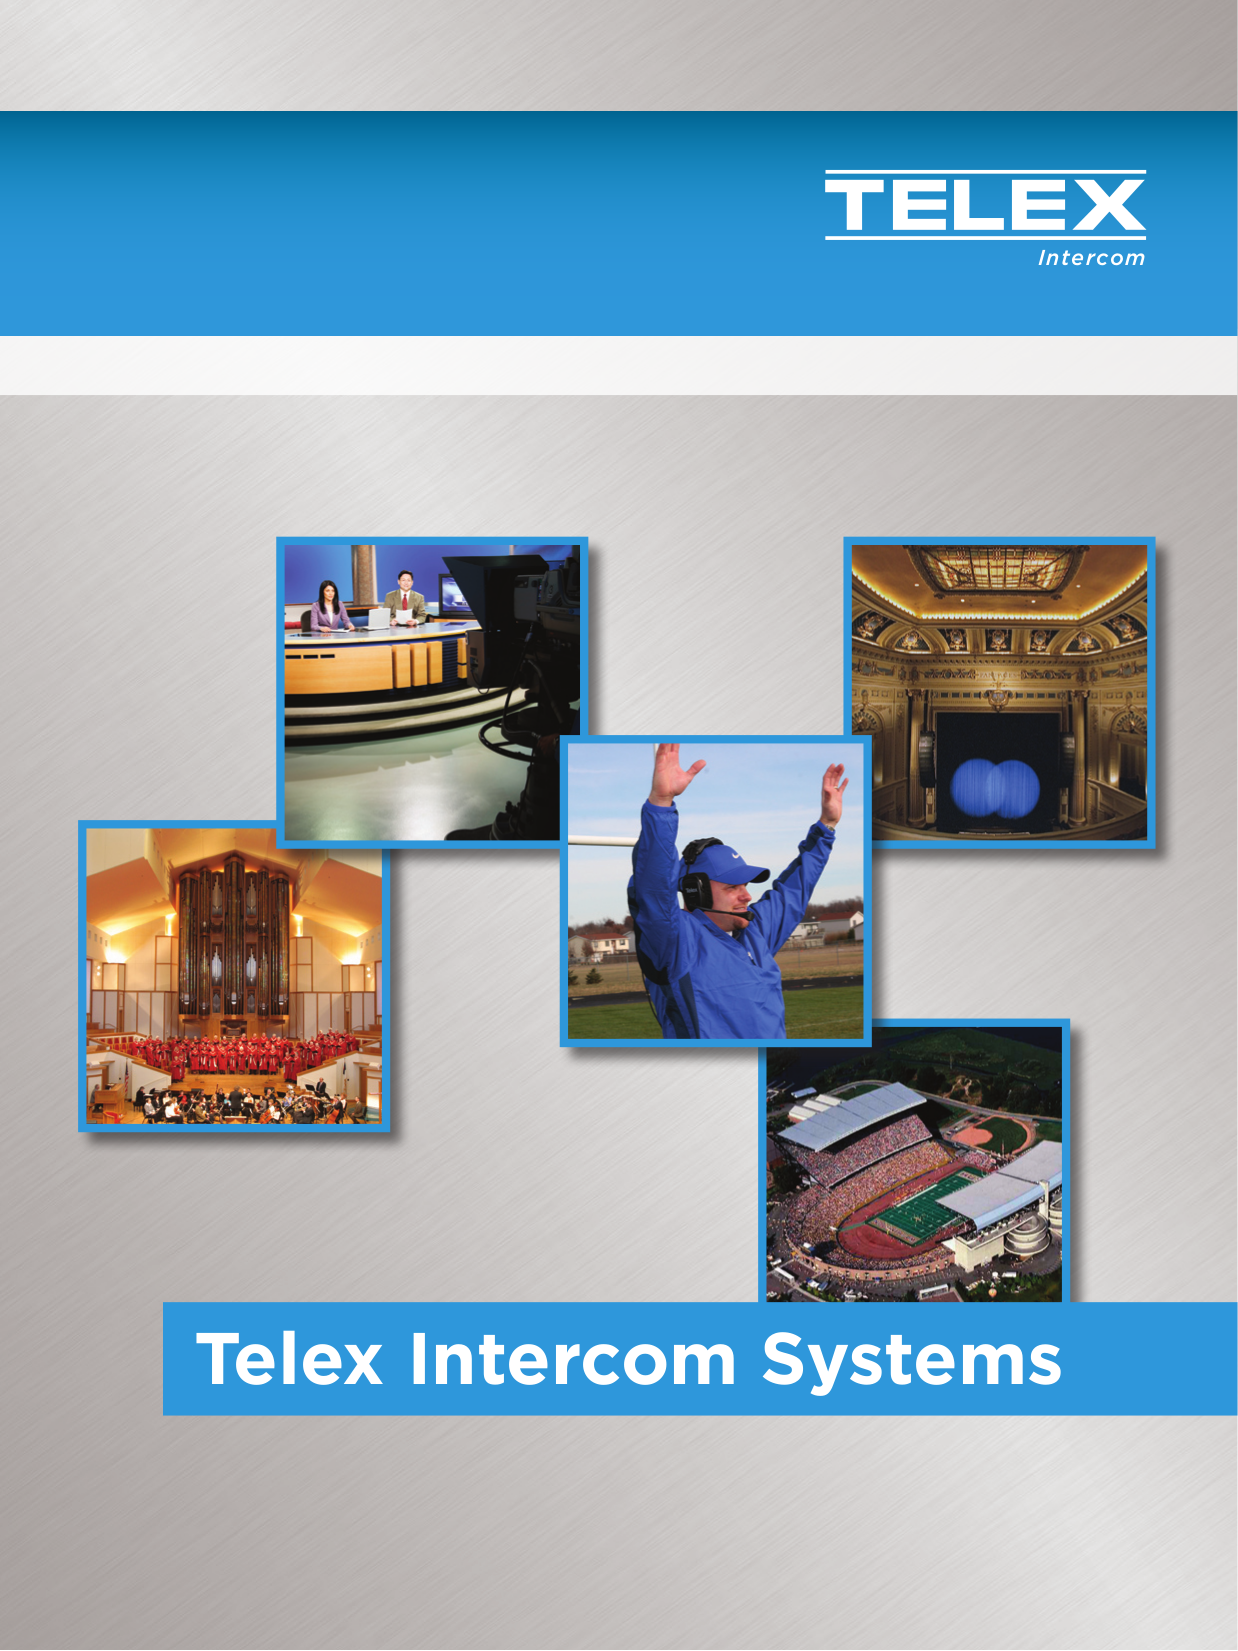 pdf for Telex Other SS-1002 Intercom System manual